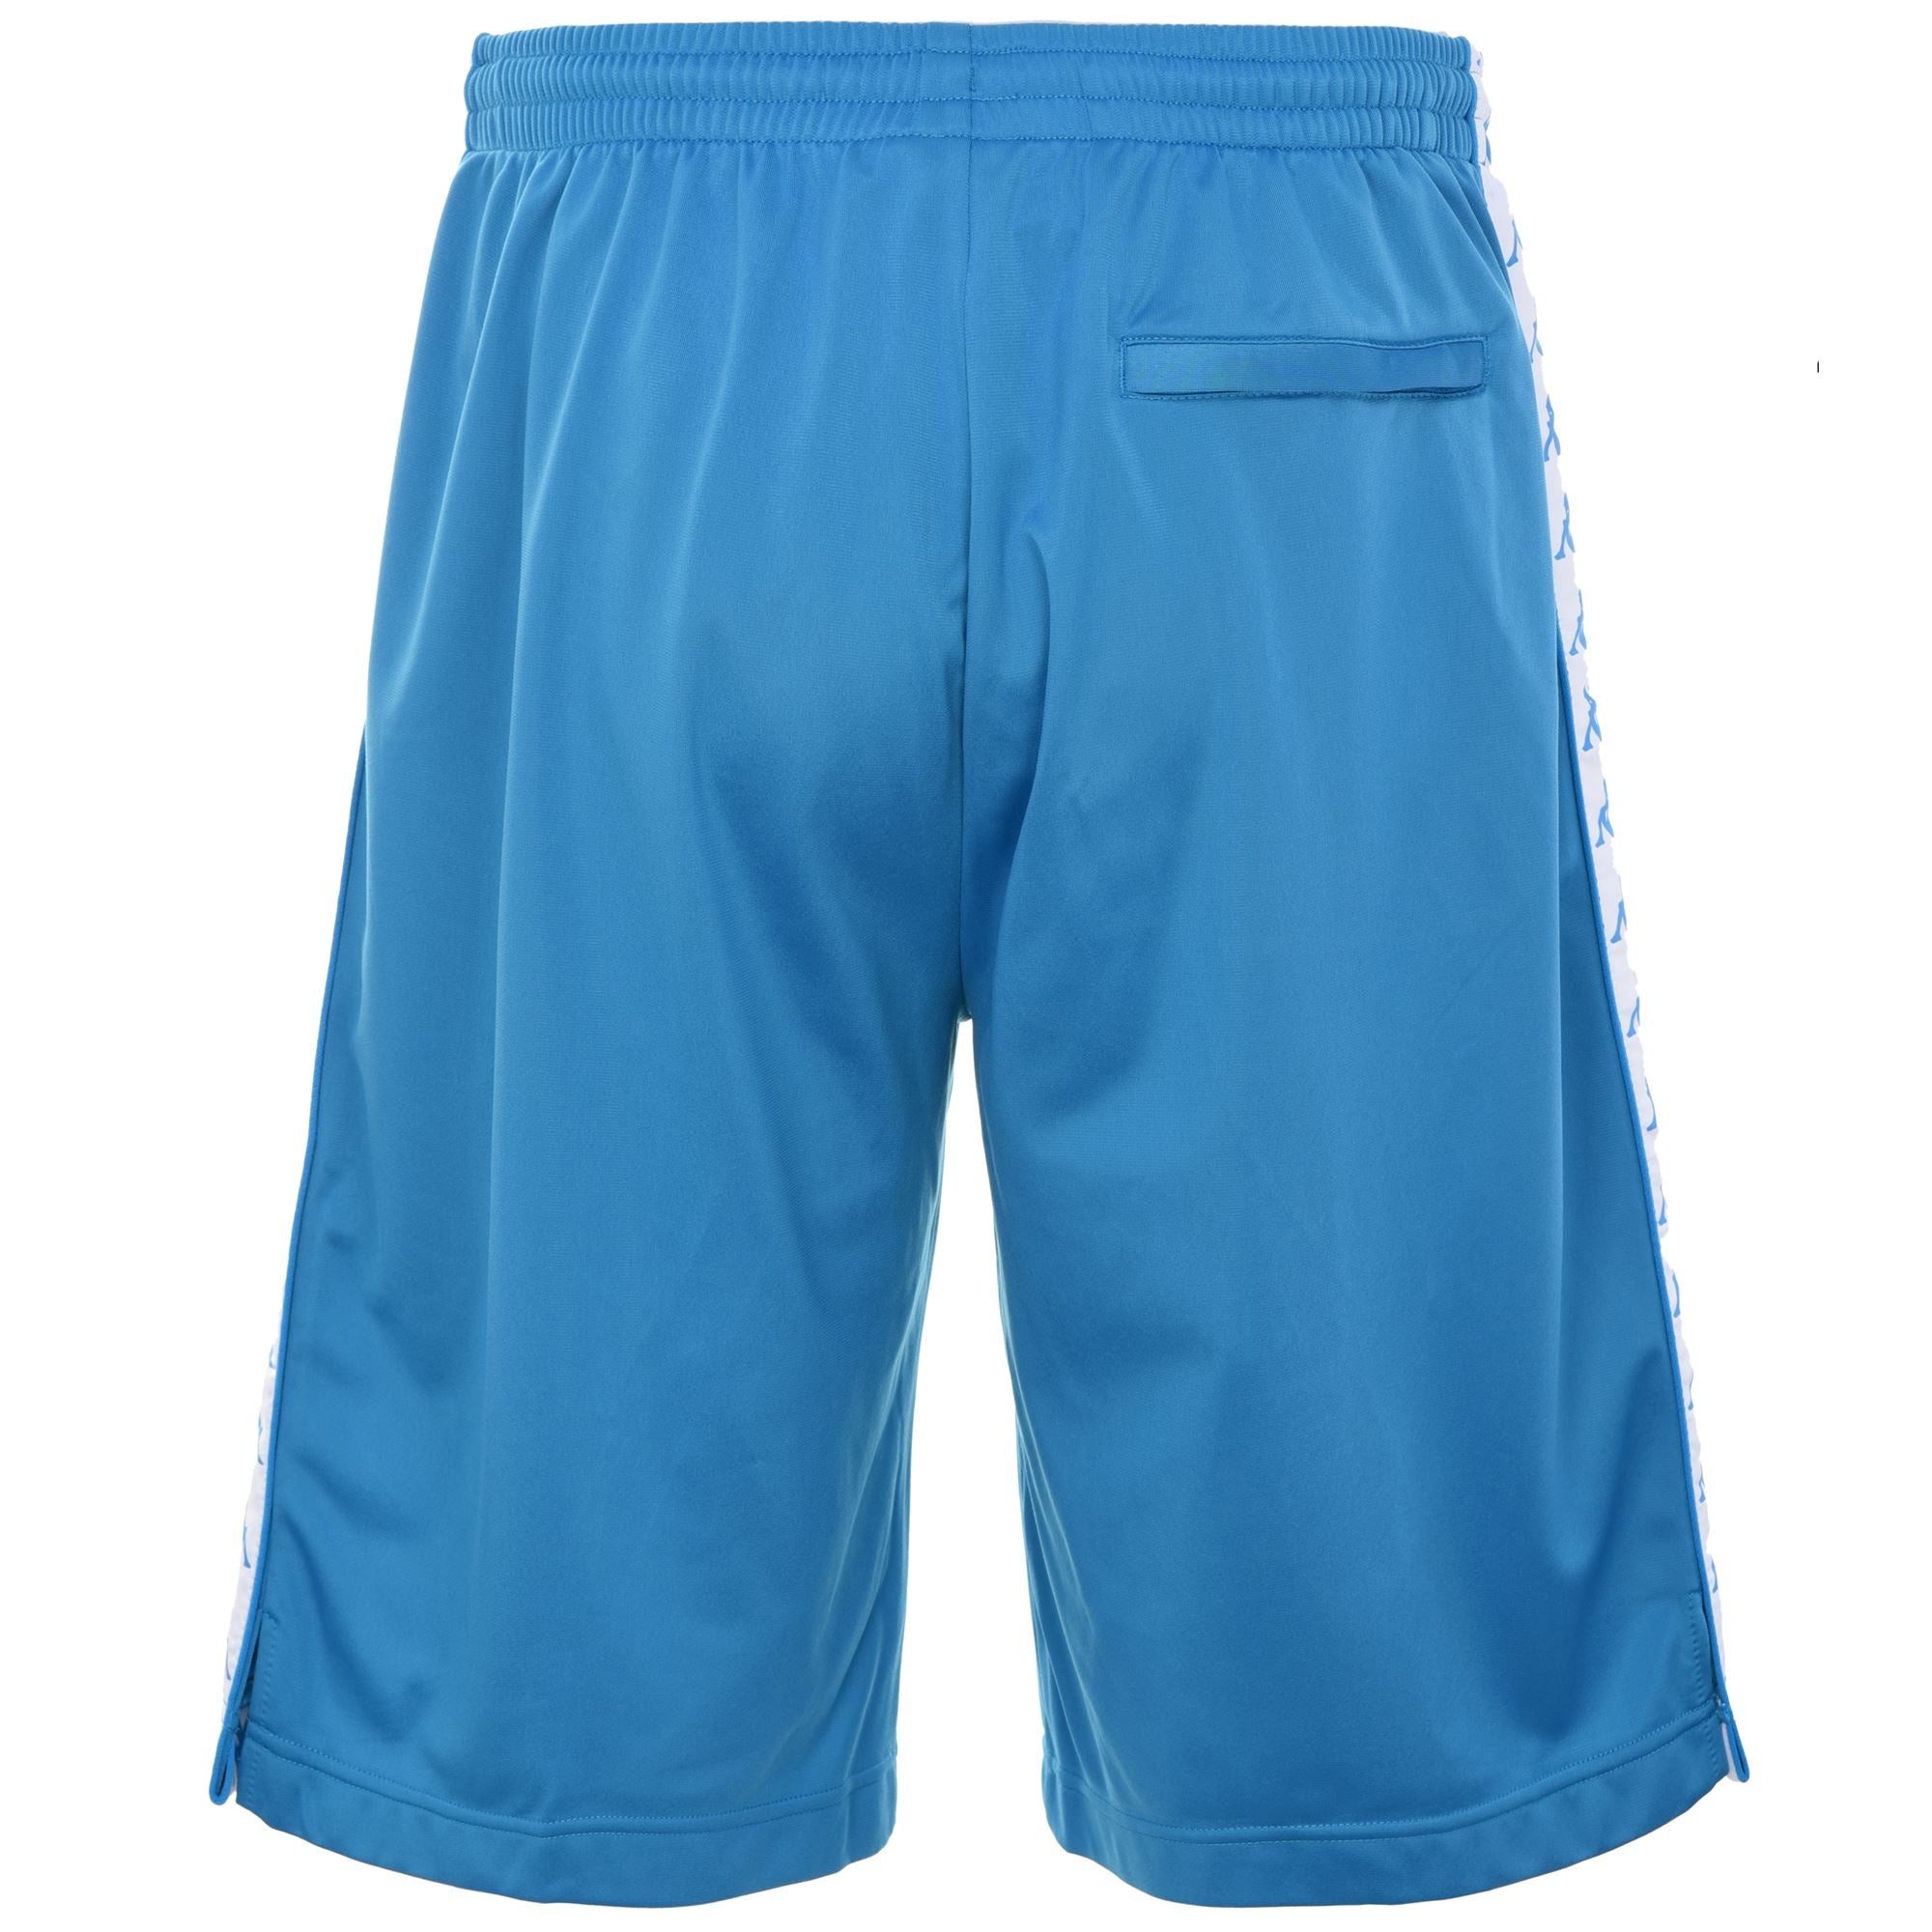 222 BANDA TREADWELLZ - Shorts - Sport Shorts - Man - BLUE SMURF-WHITE